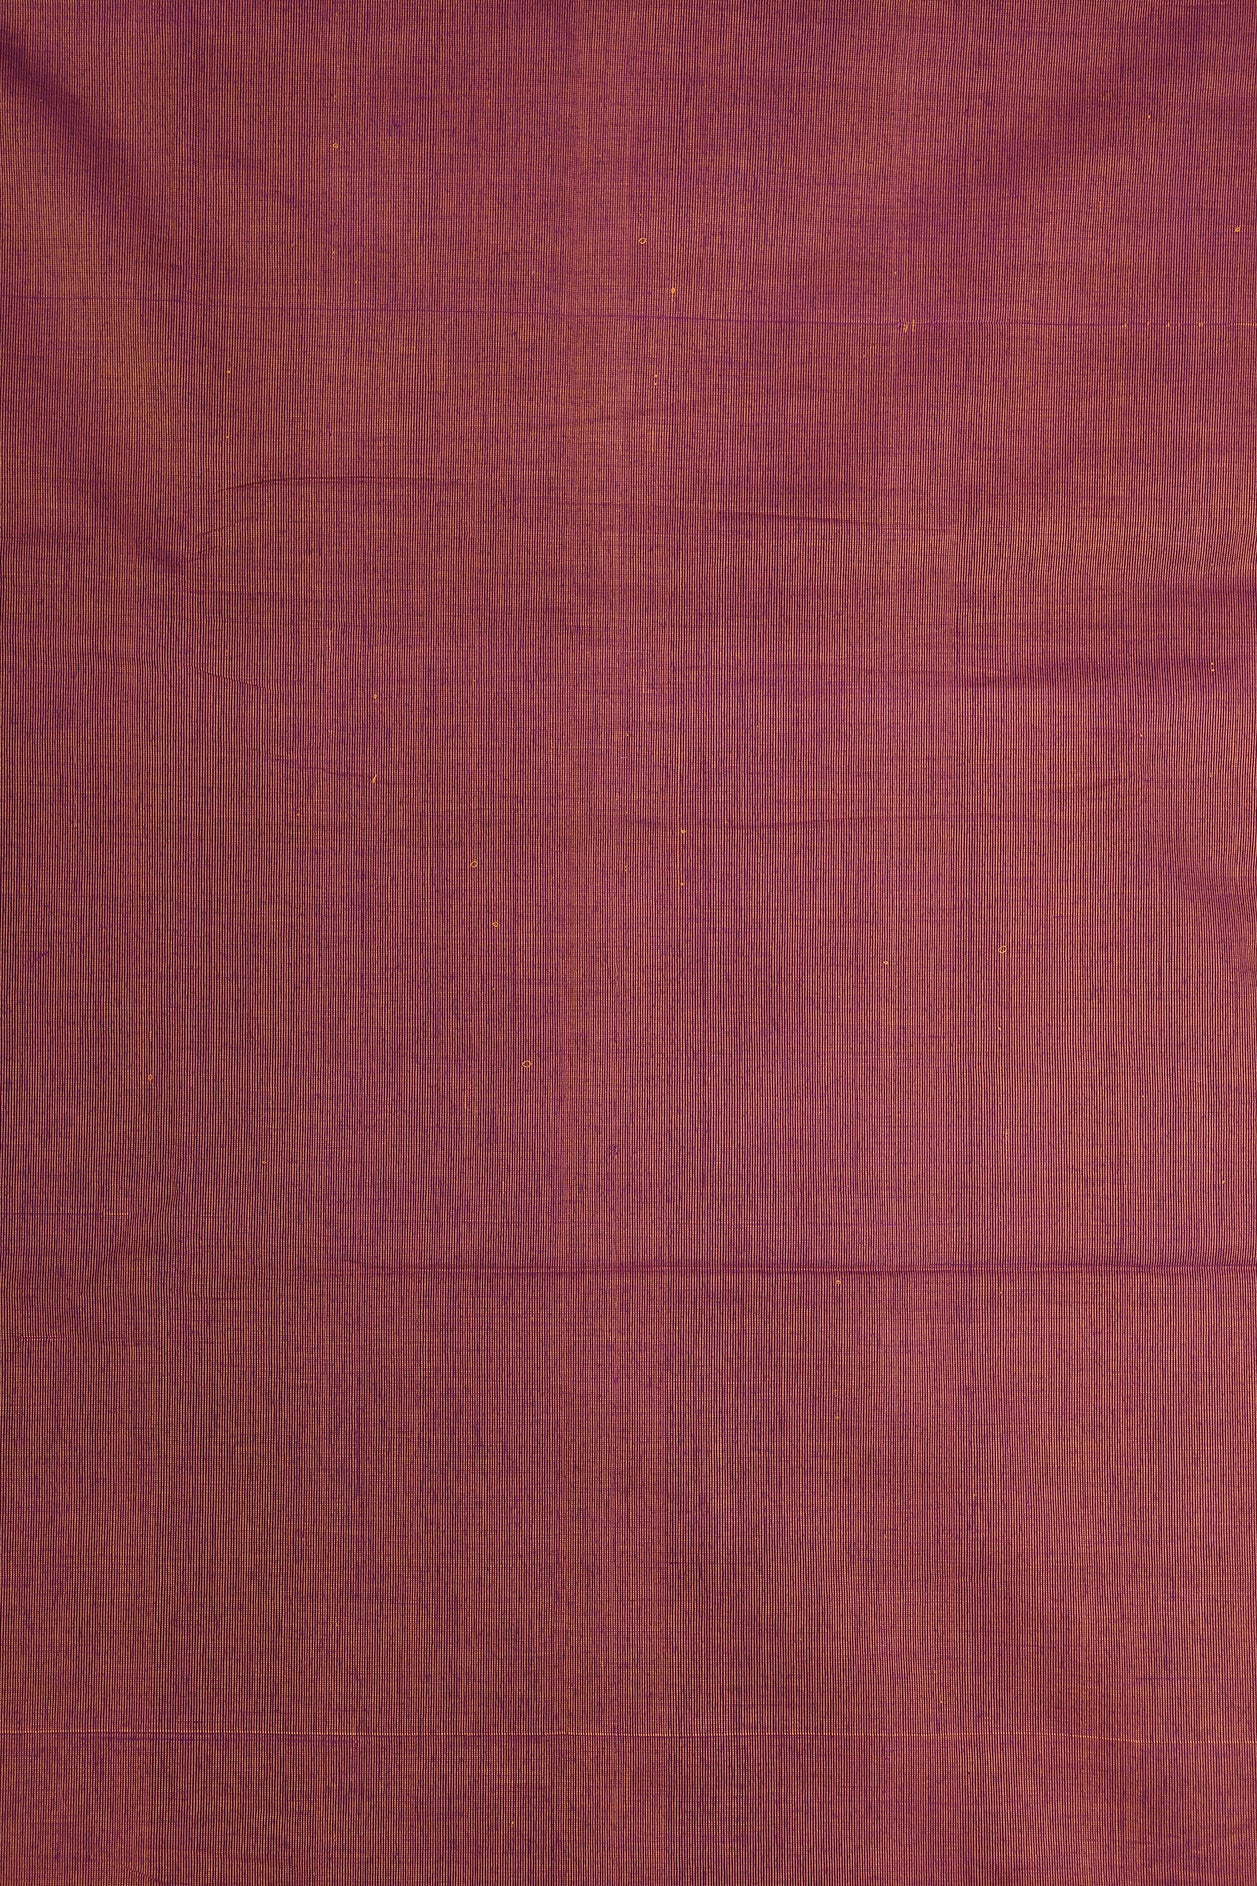 Small Plain Border With Monochrome Stripes Purple Coimbatore Cotton Saree